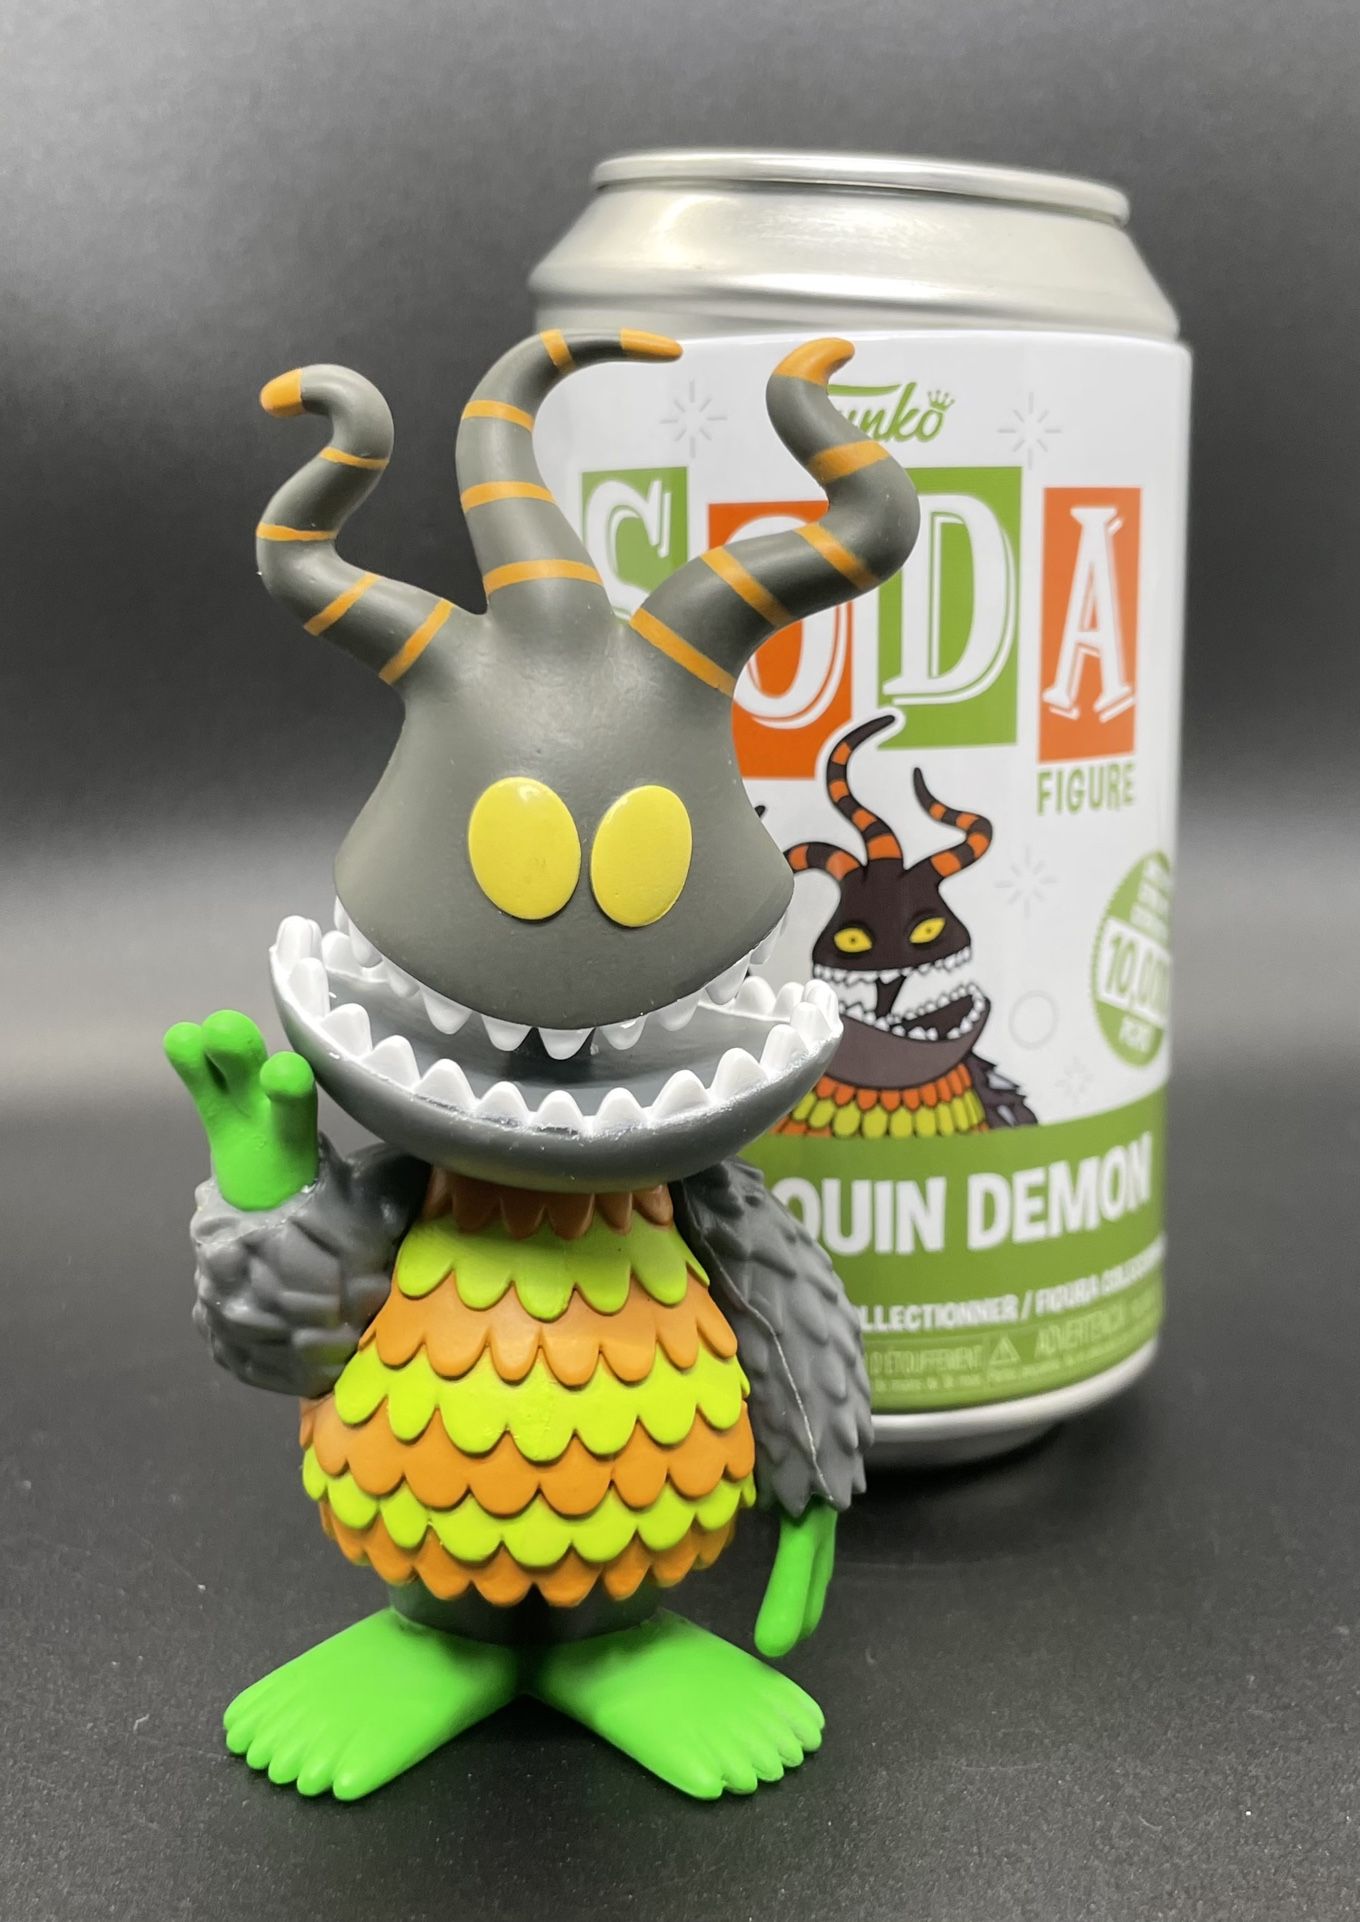 New Harlequin Demon Funko Soda